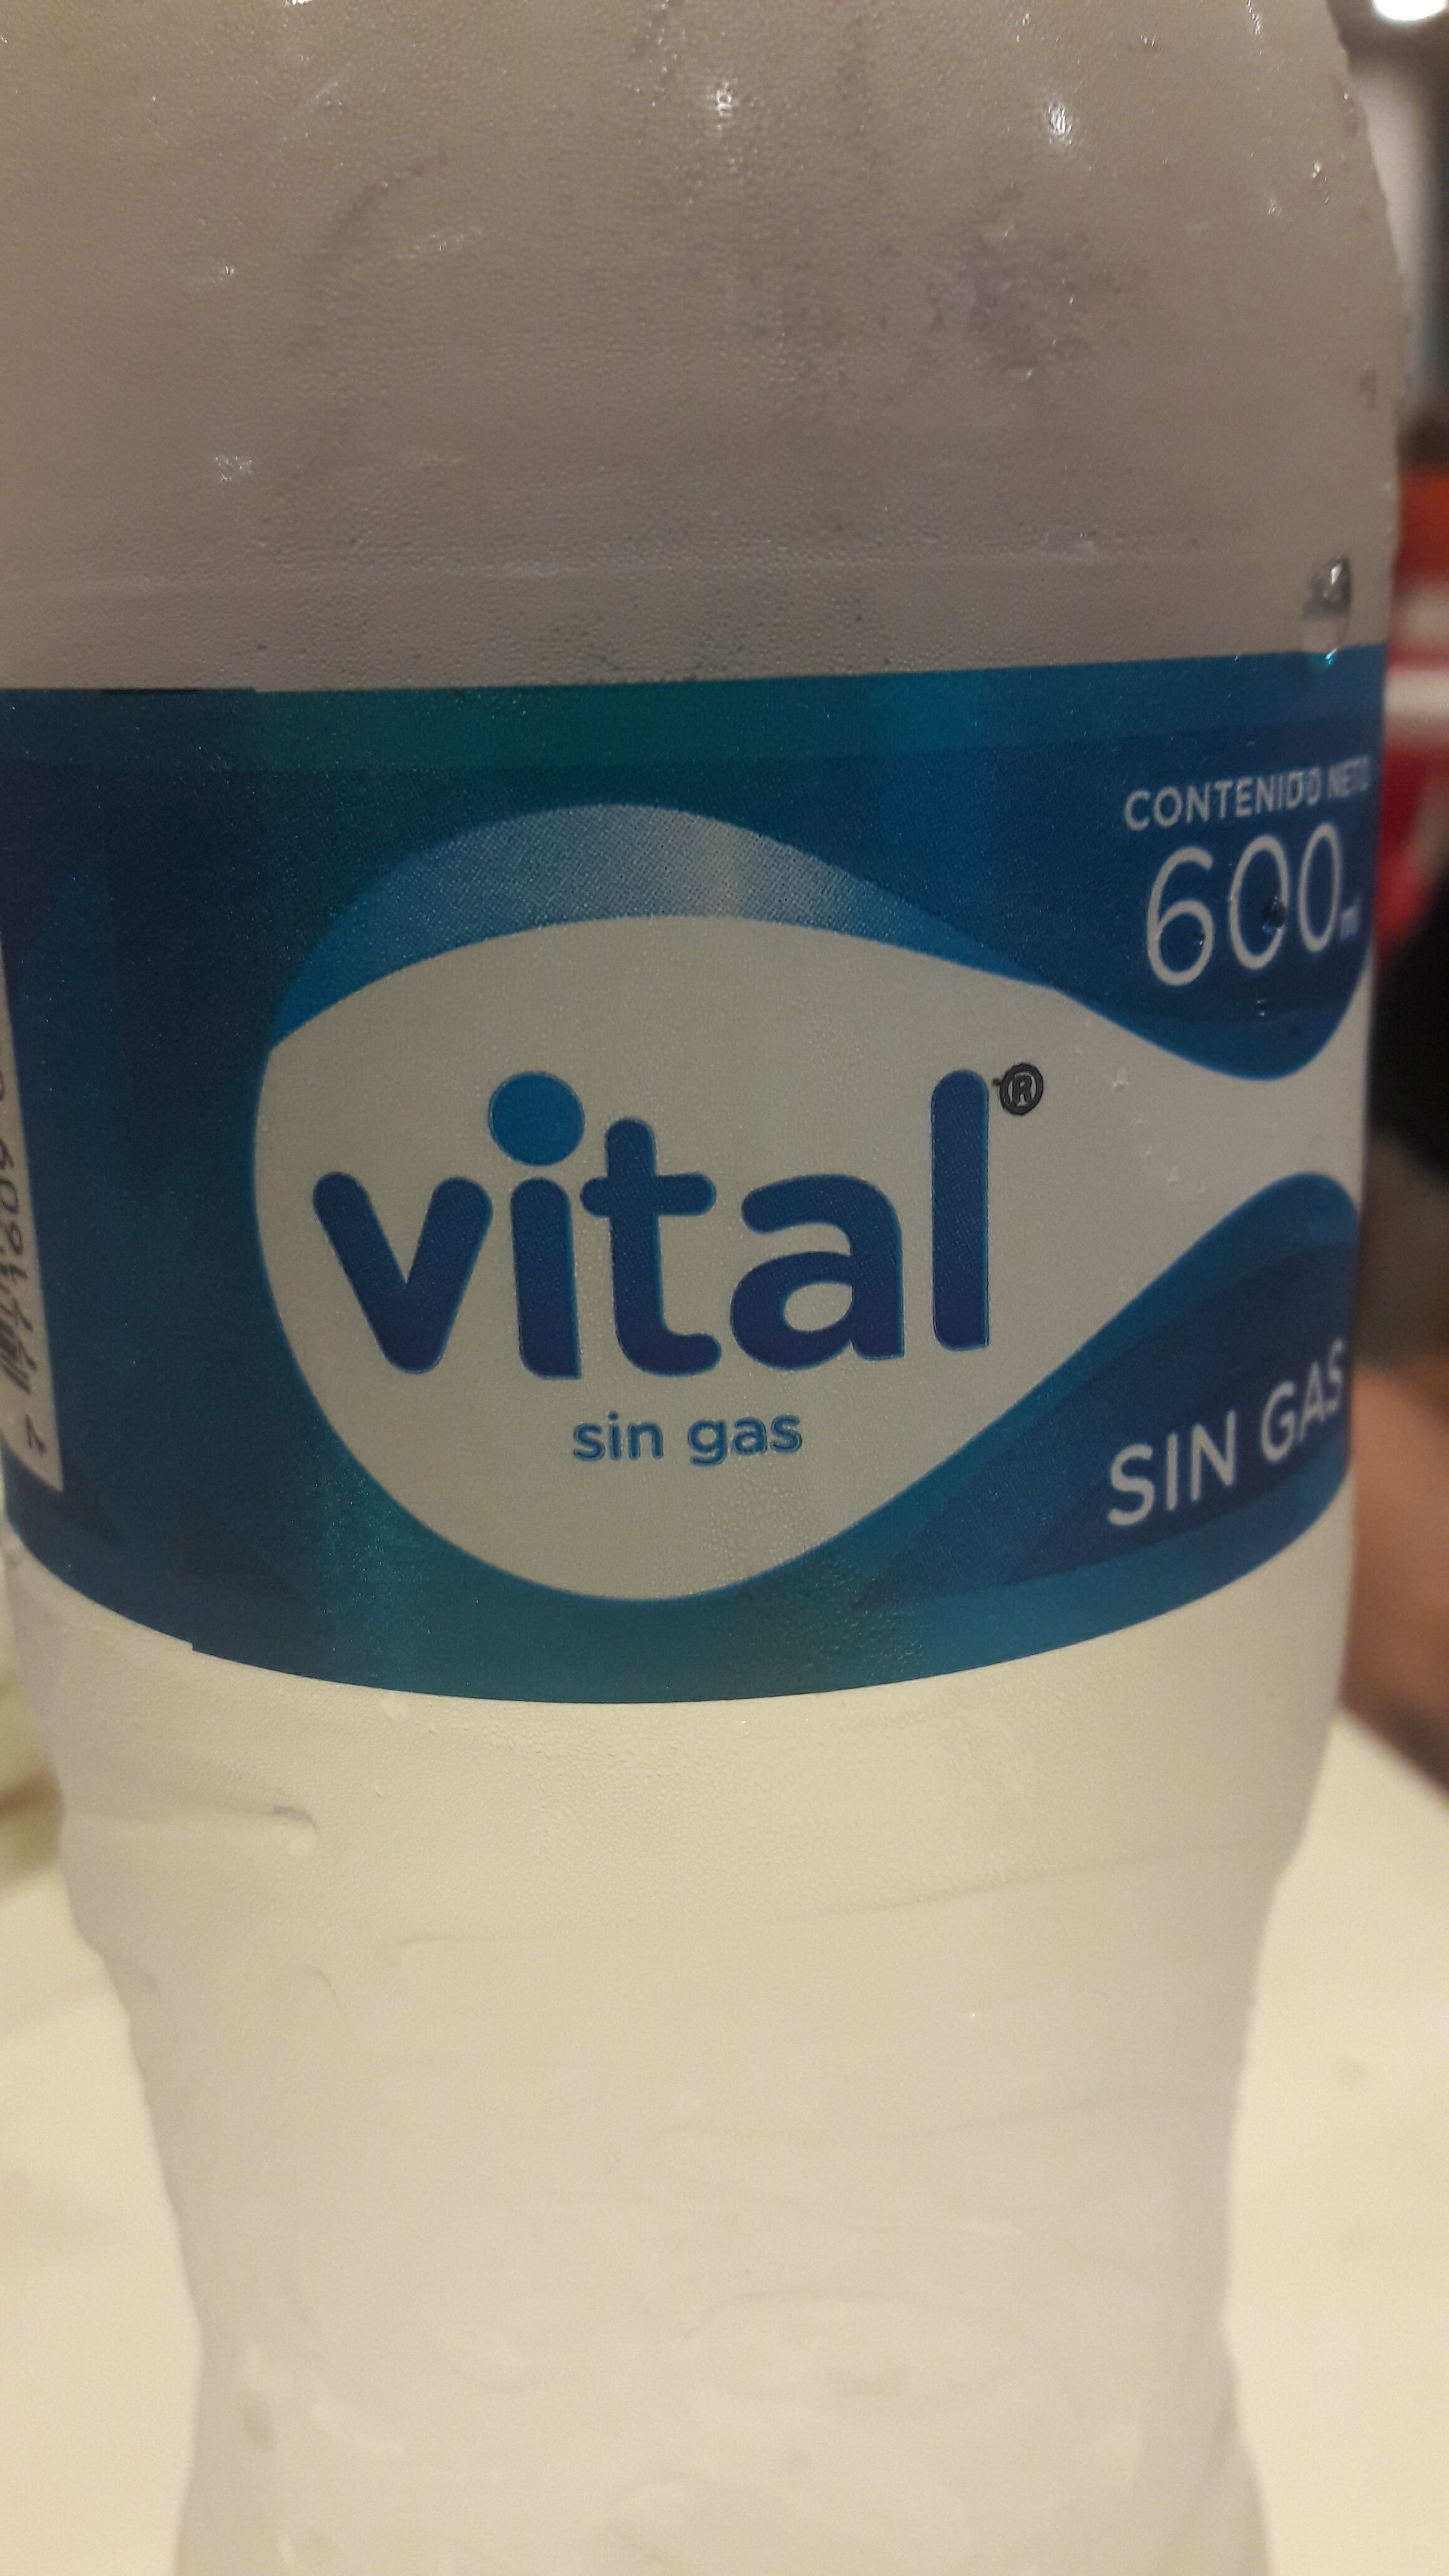 Vital sin gas - Product